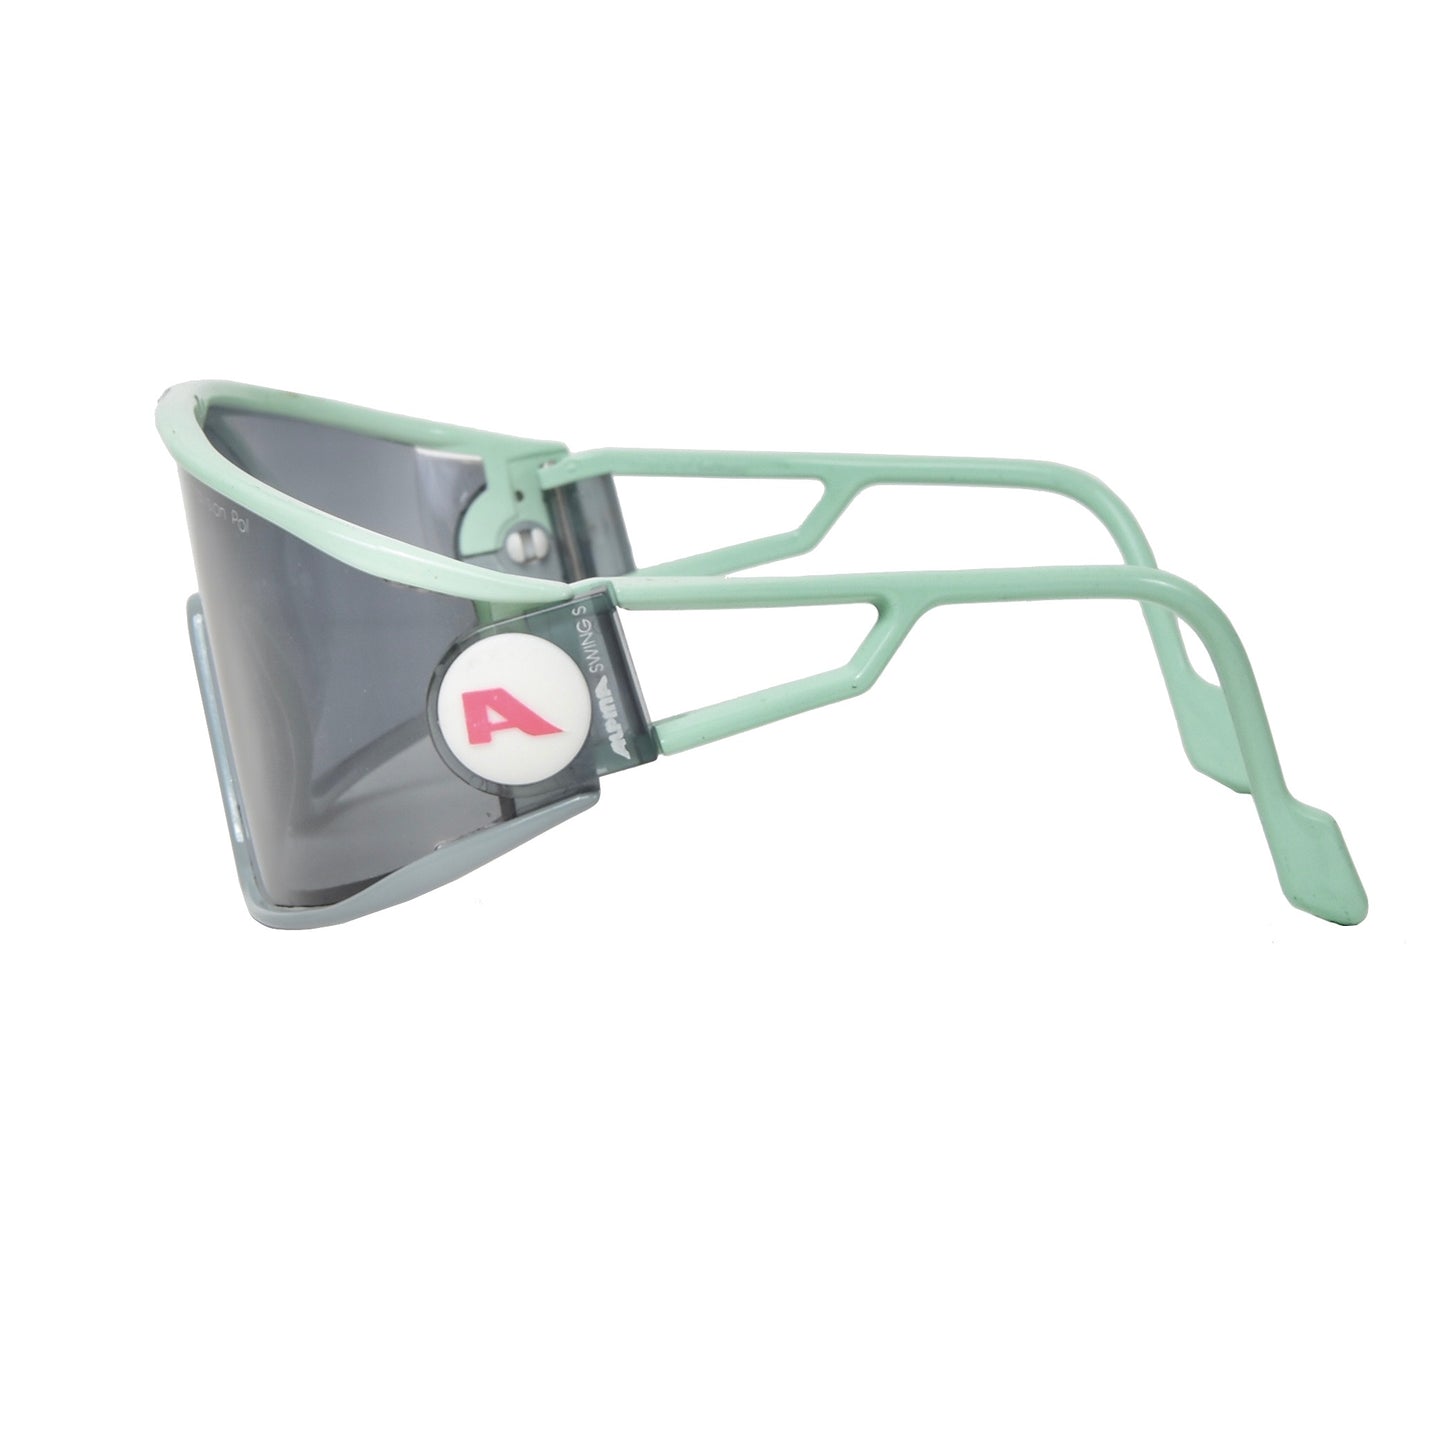 Vintage Alpina Swing Shield Sunglasses - Seafoam Green